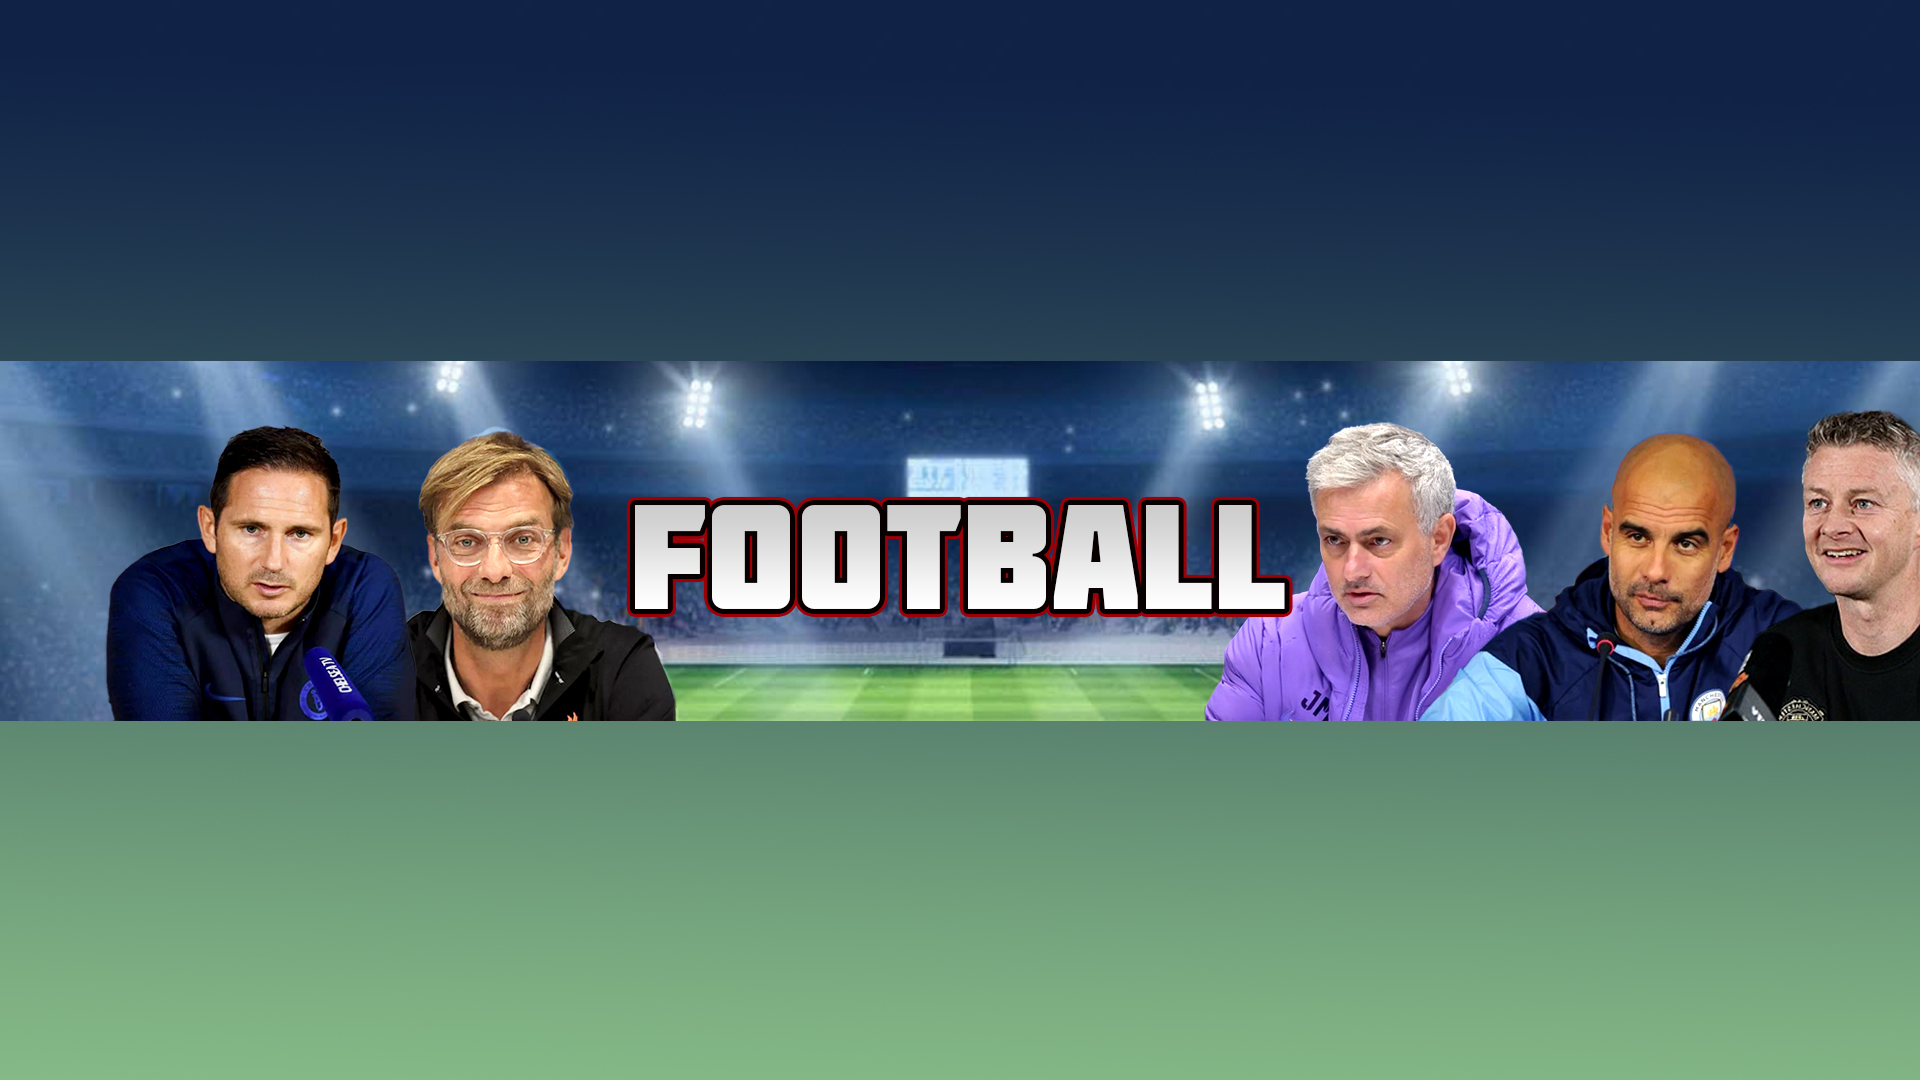 Football talk & interview